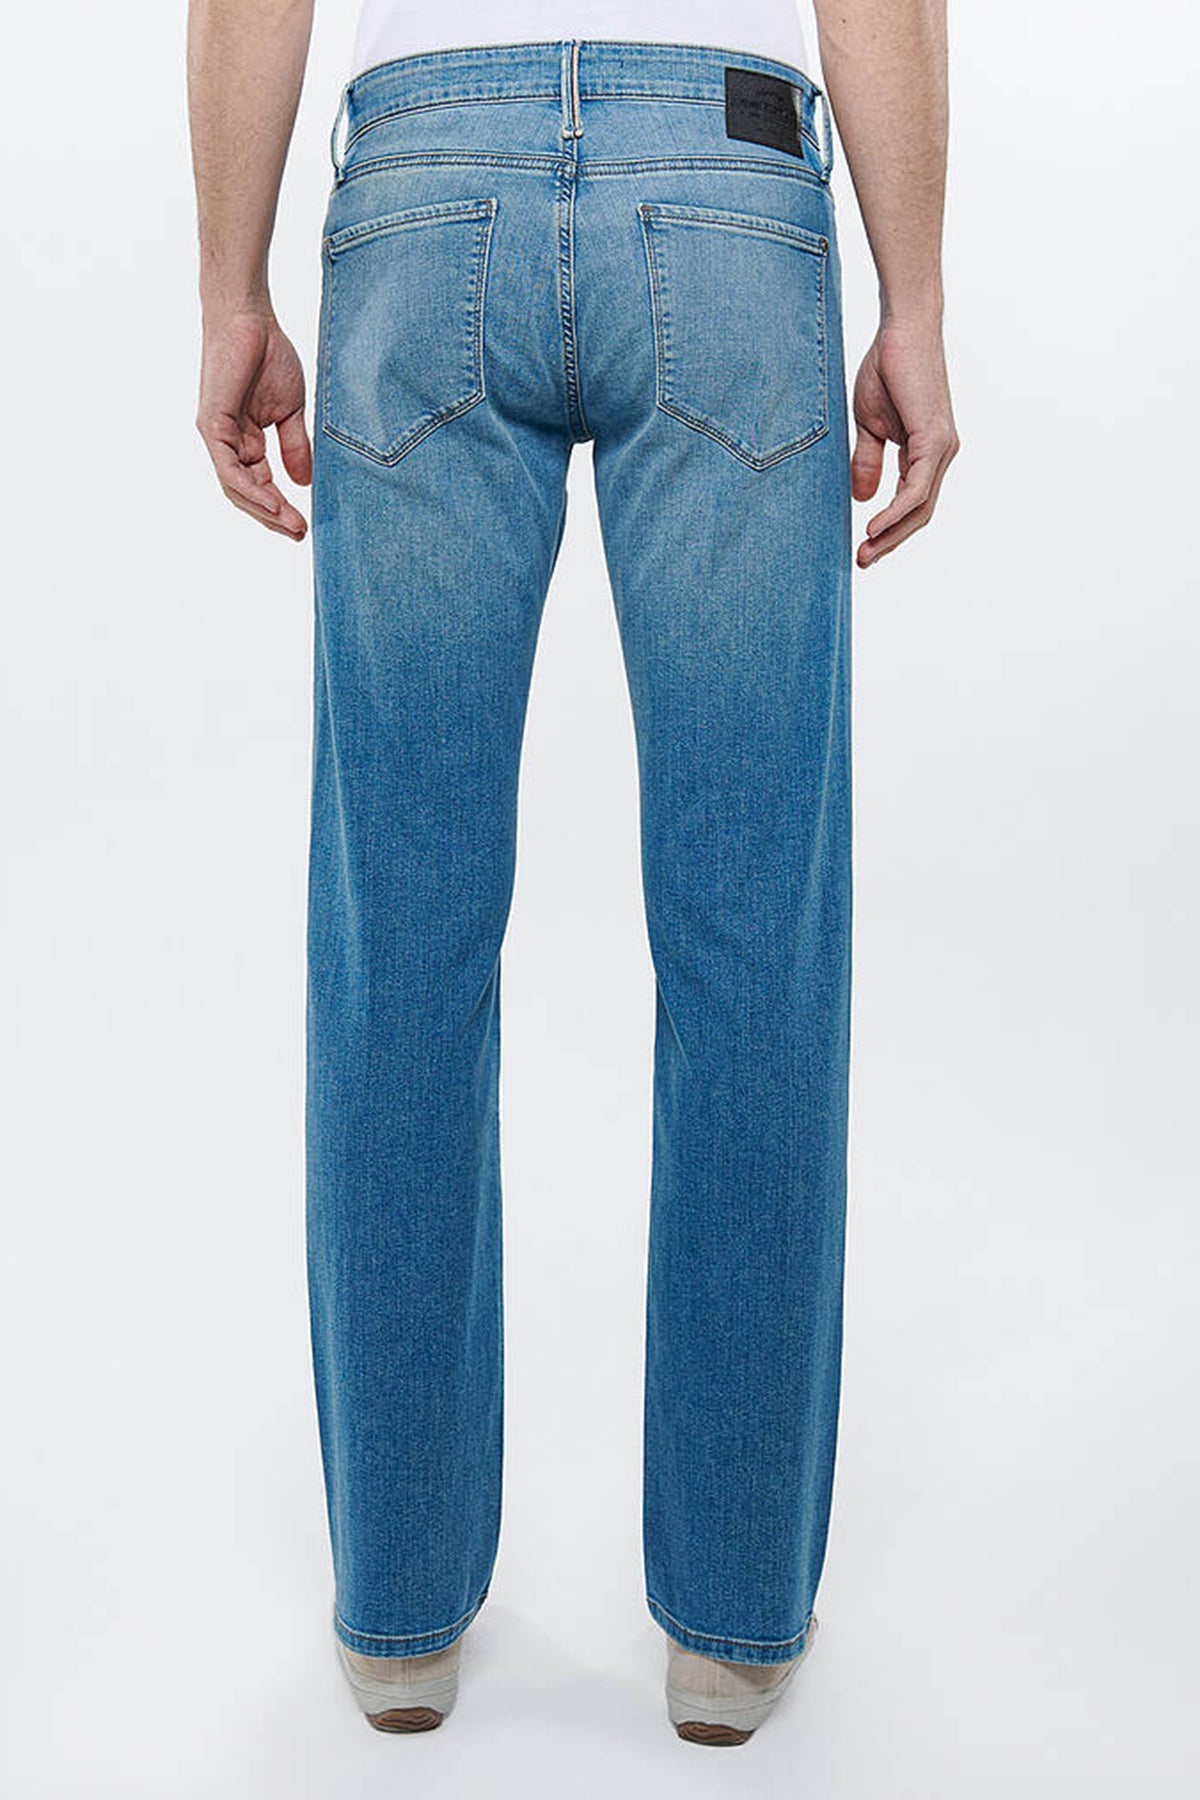 Mavi Hunter Pamuklu Normal Bel Regular Straight Düz Paça Jeans Erkek Kot Pantolon 0020228709 AÇIK MAVİ